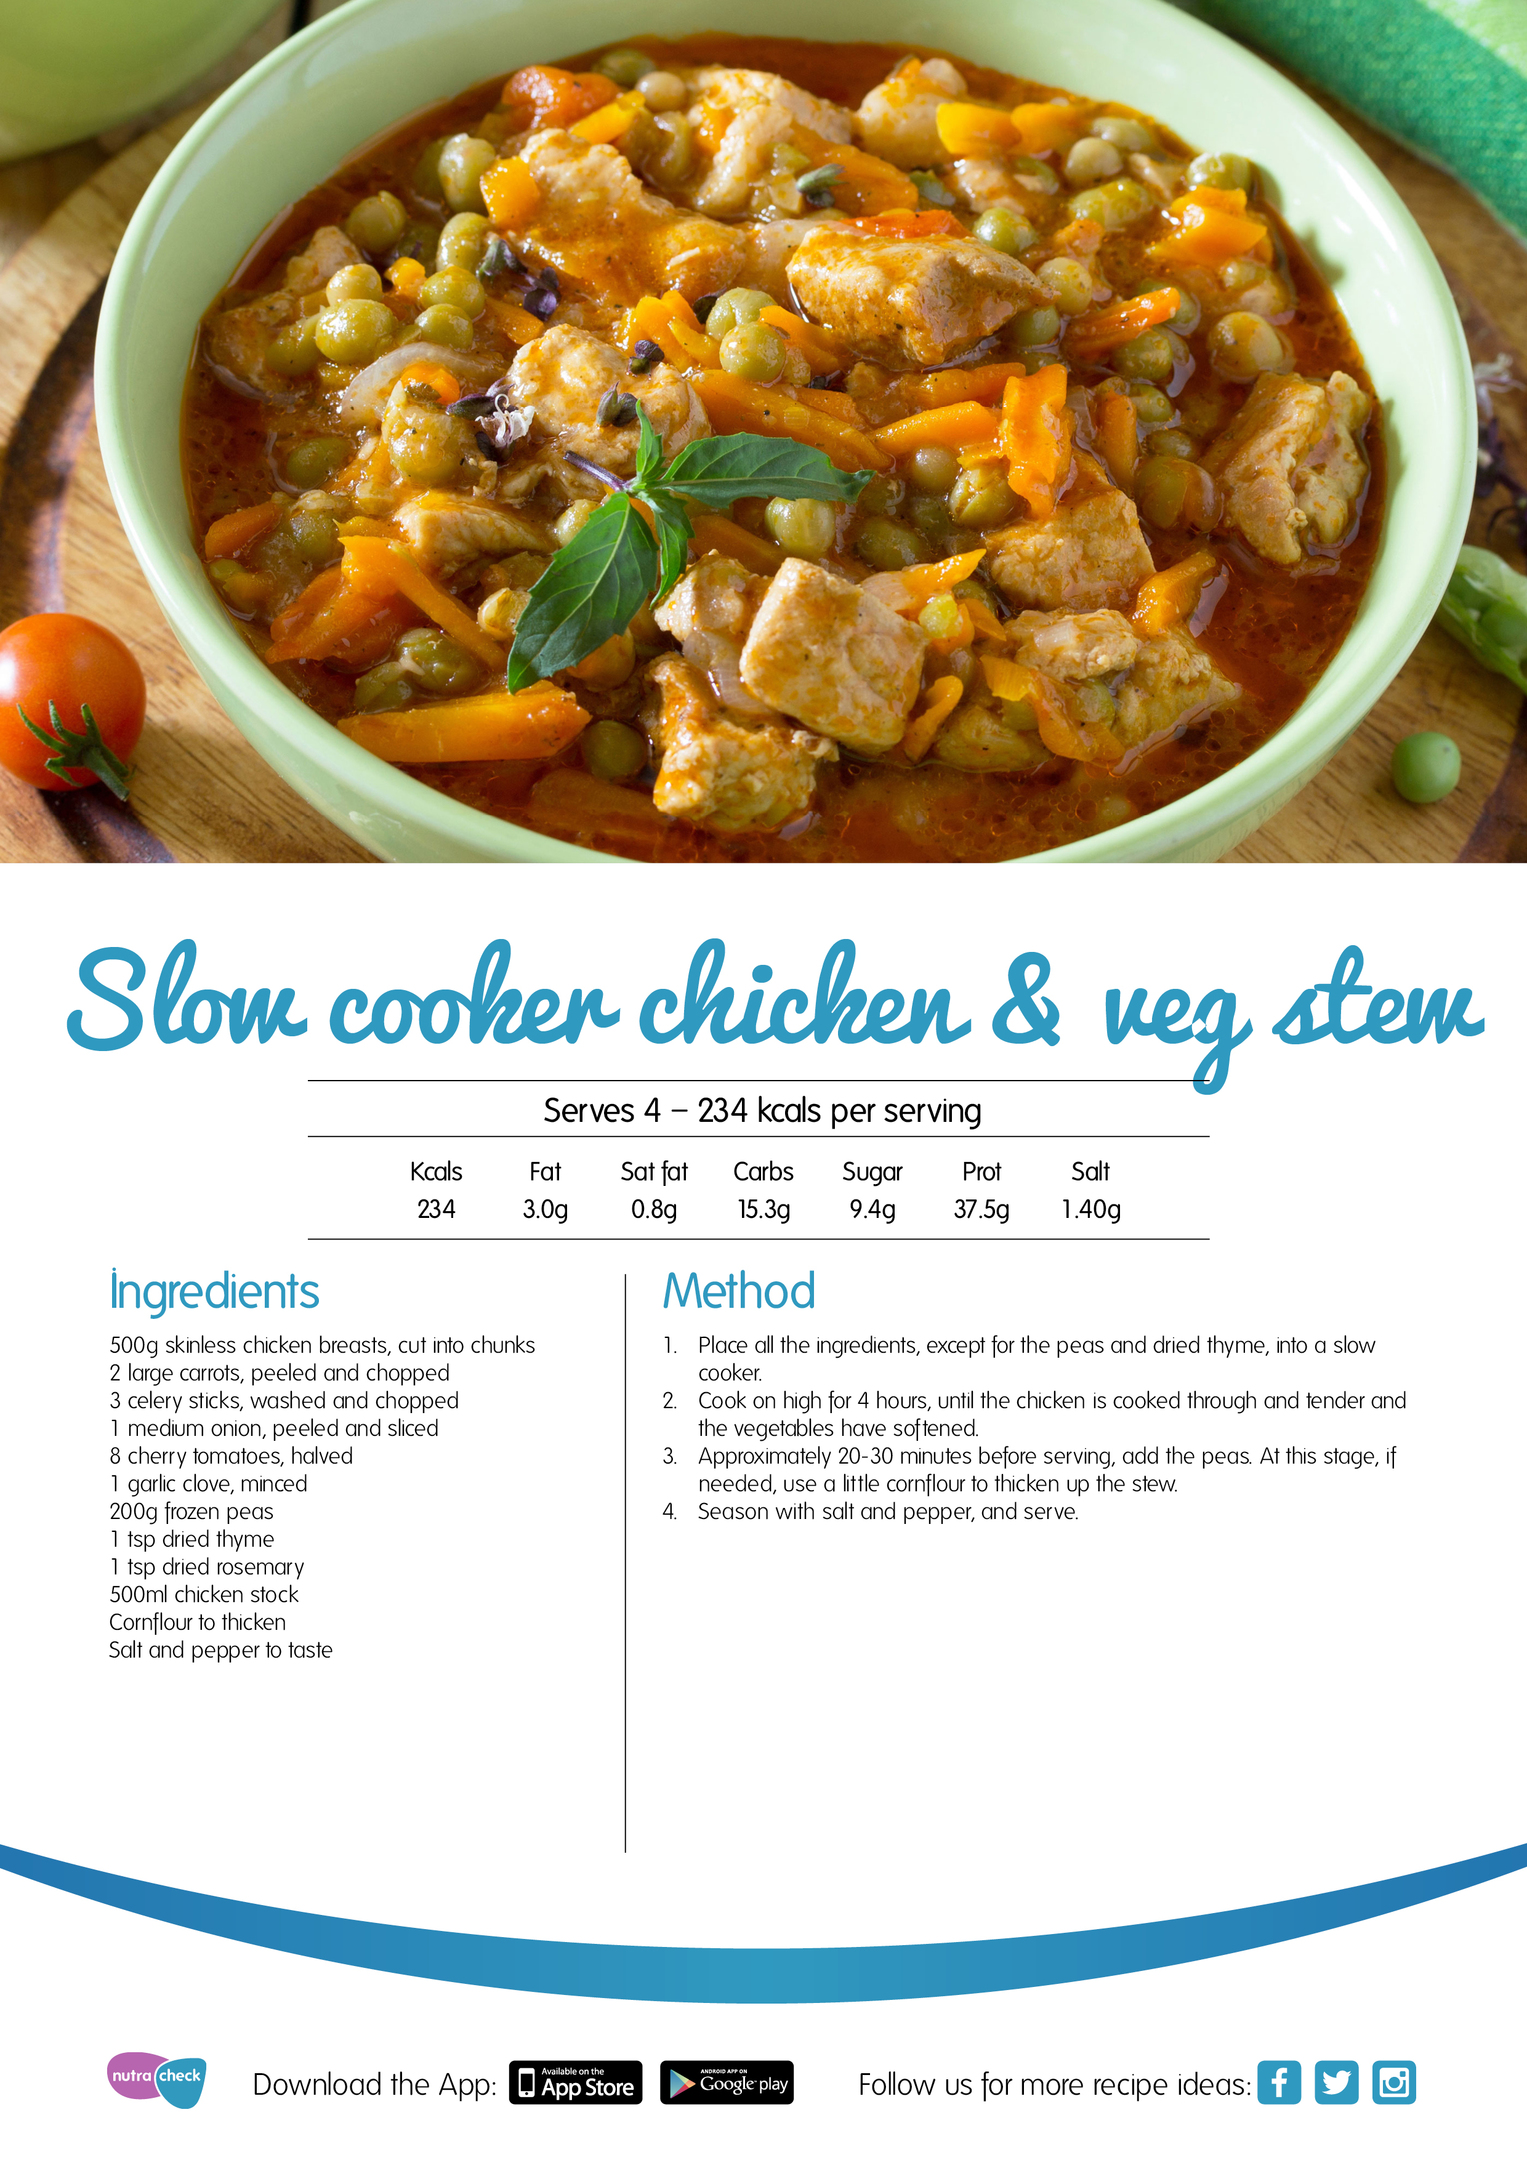 Slower cooker chicken and veg stew